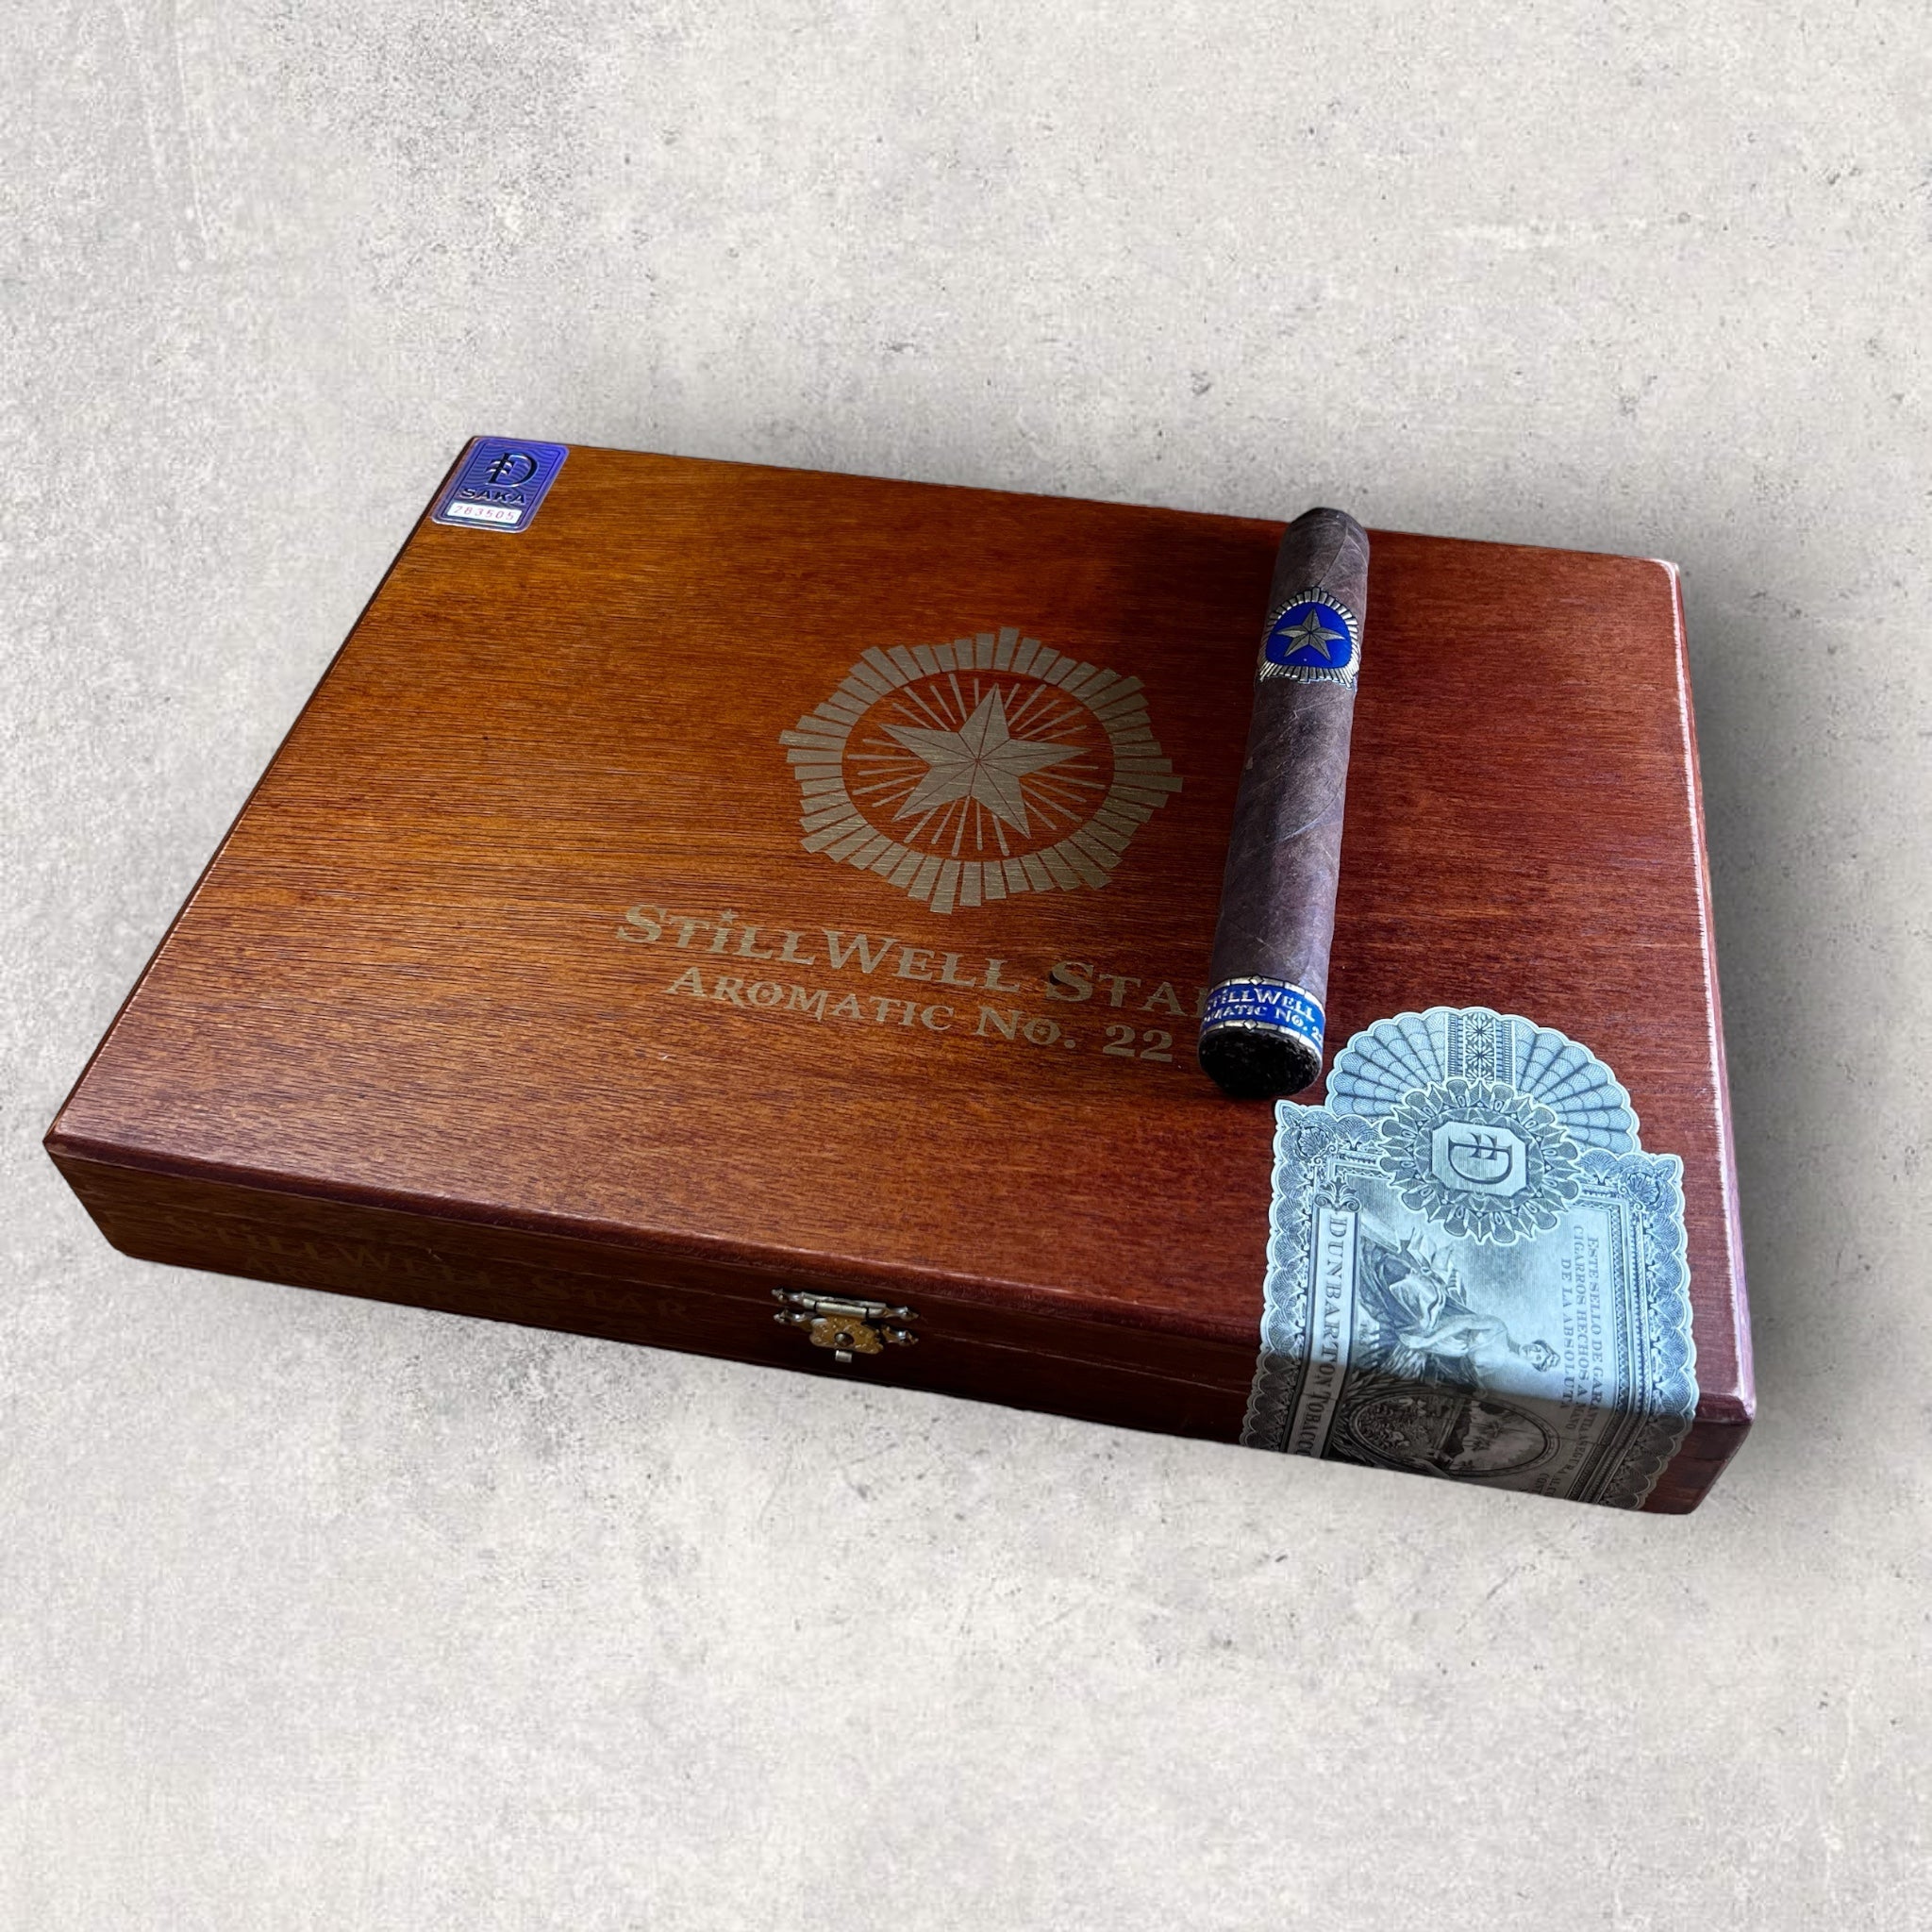 Dunbarton Stillwell Star Aromatic No. 22 - Cigar 30